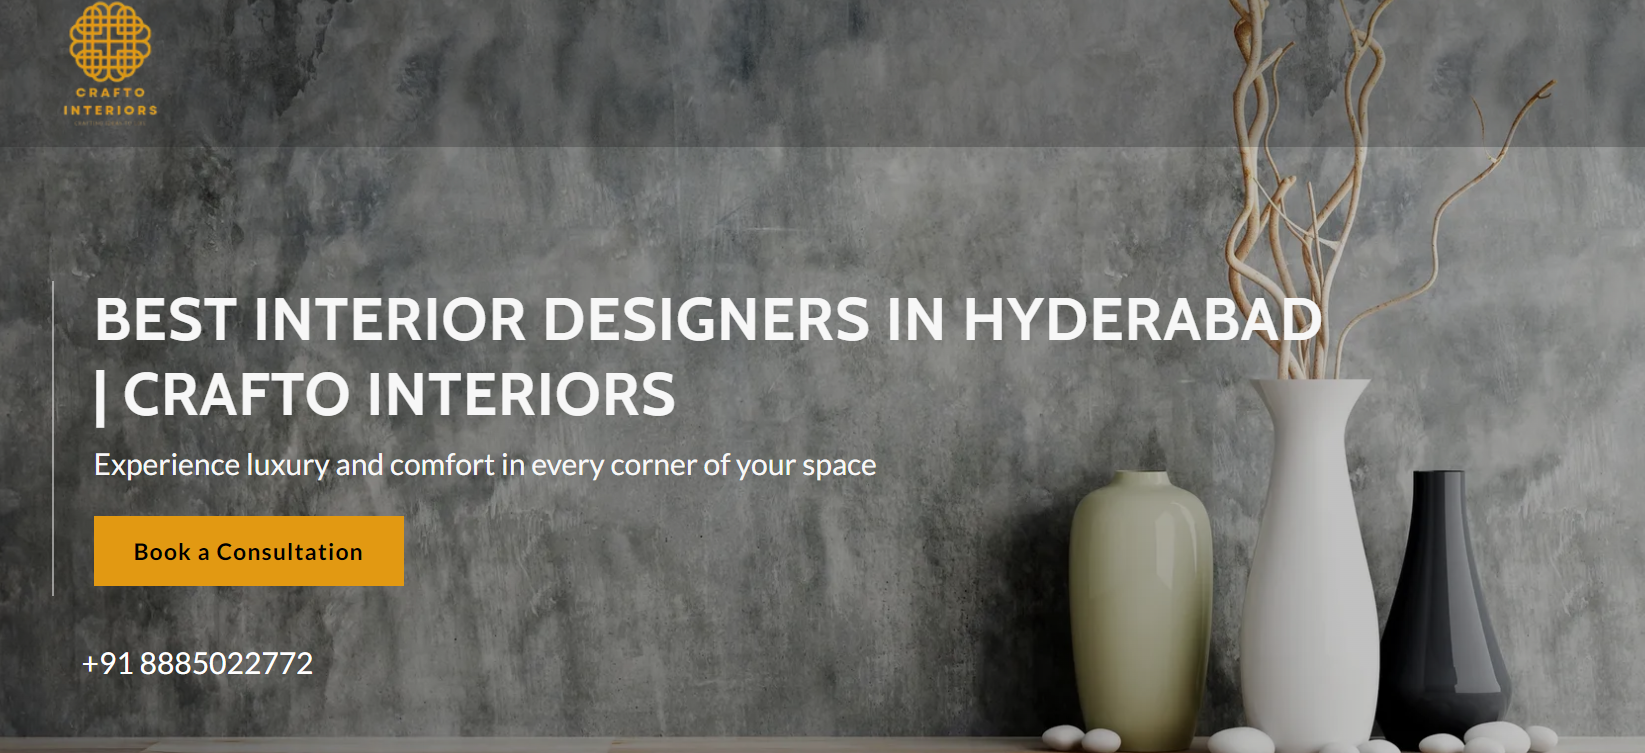  Best Interior Designers in Hyderabad | Crafto Interiors